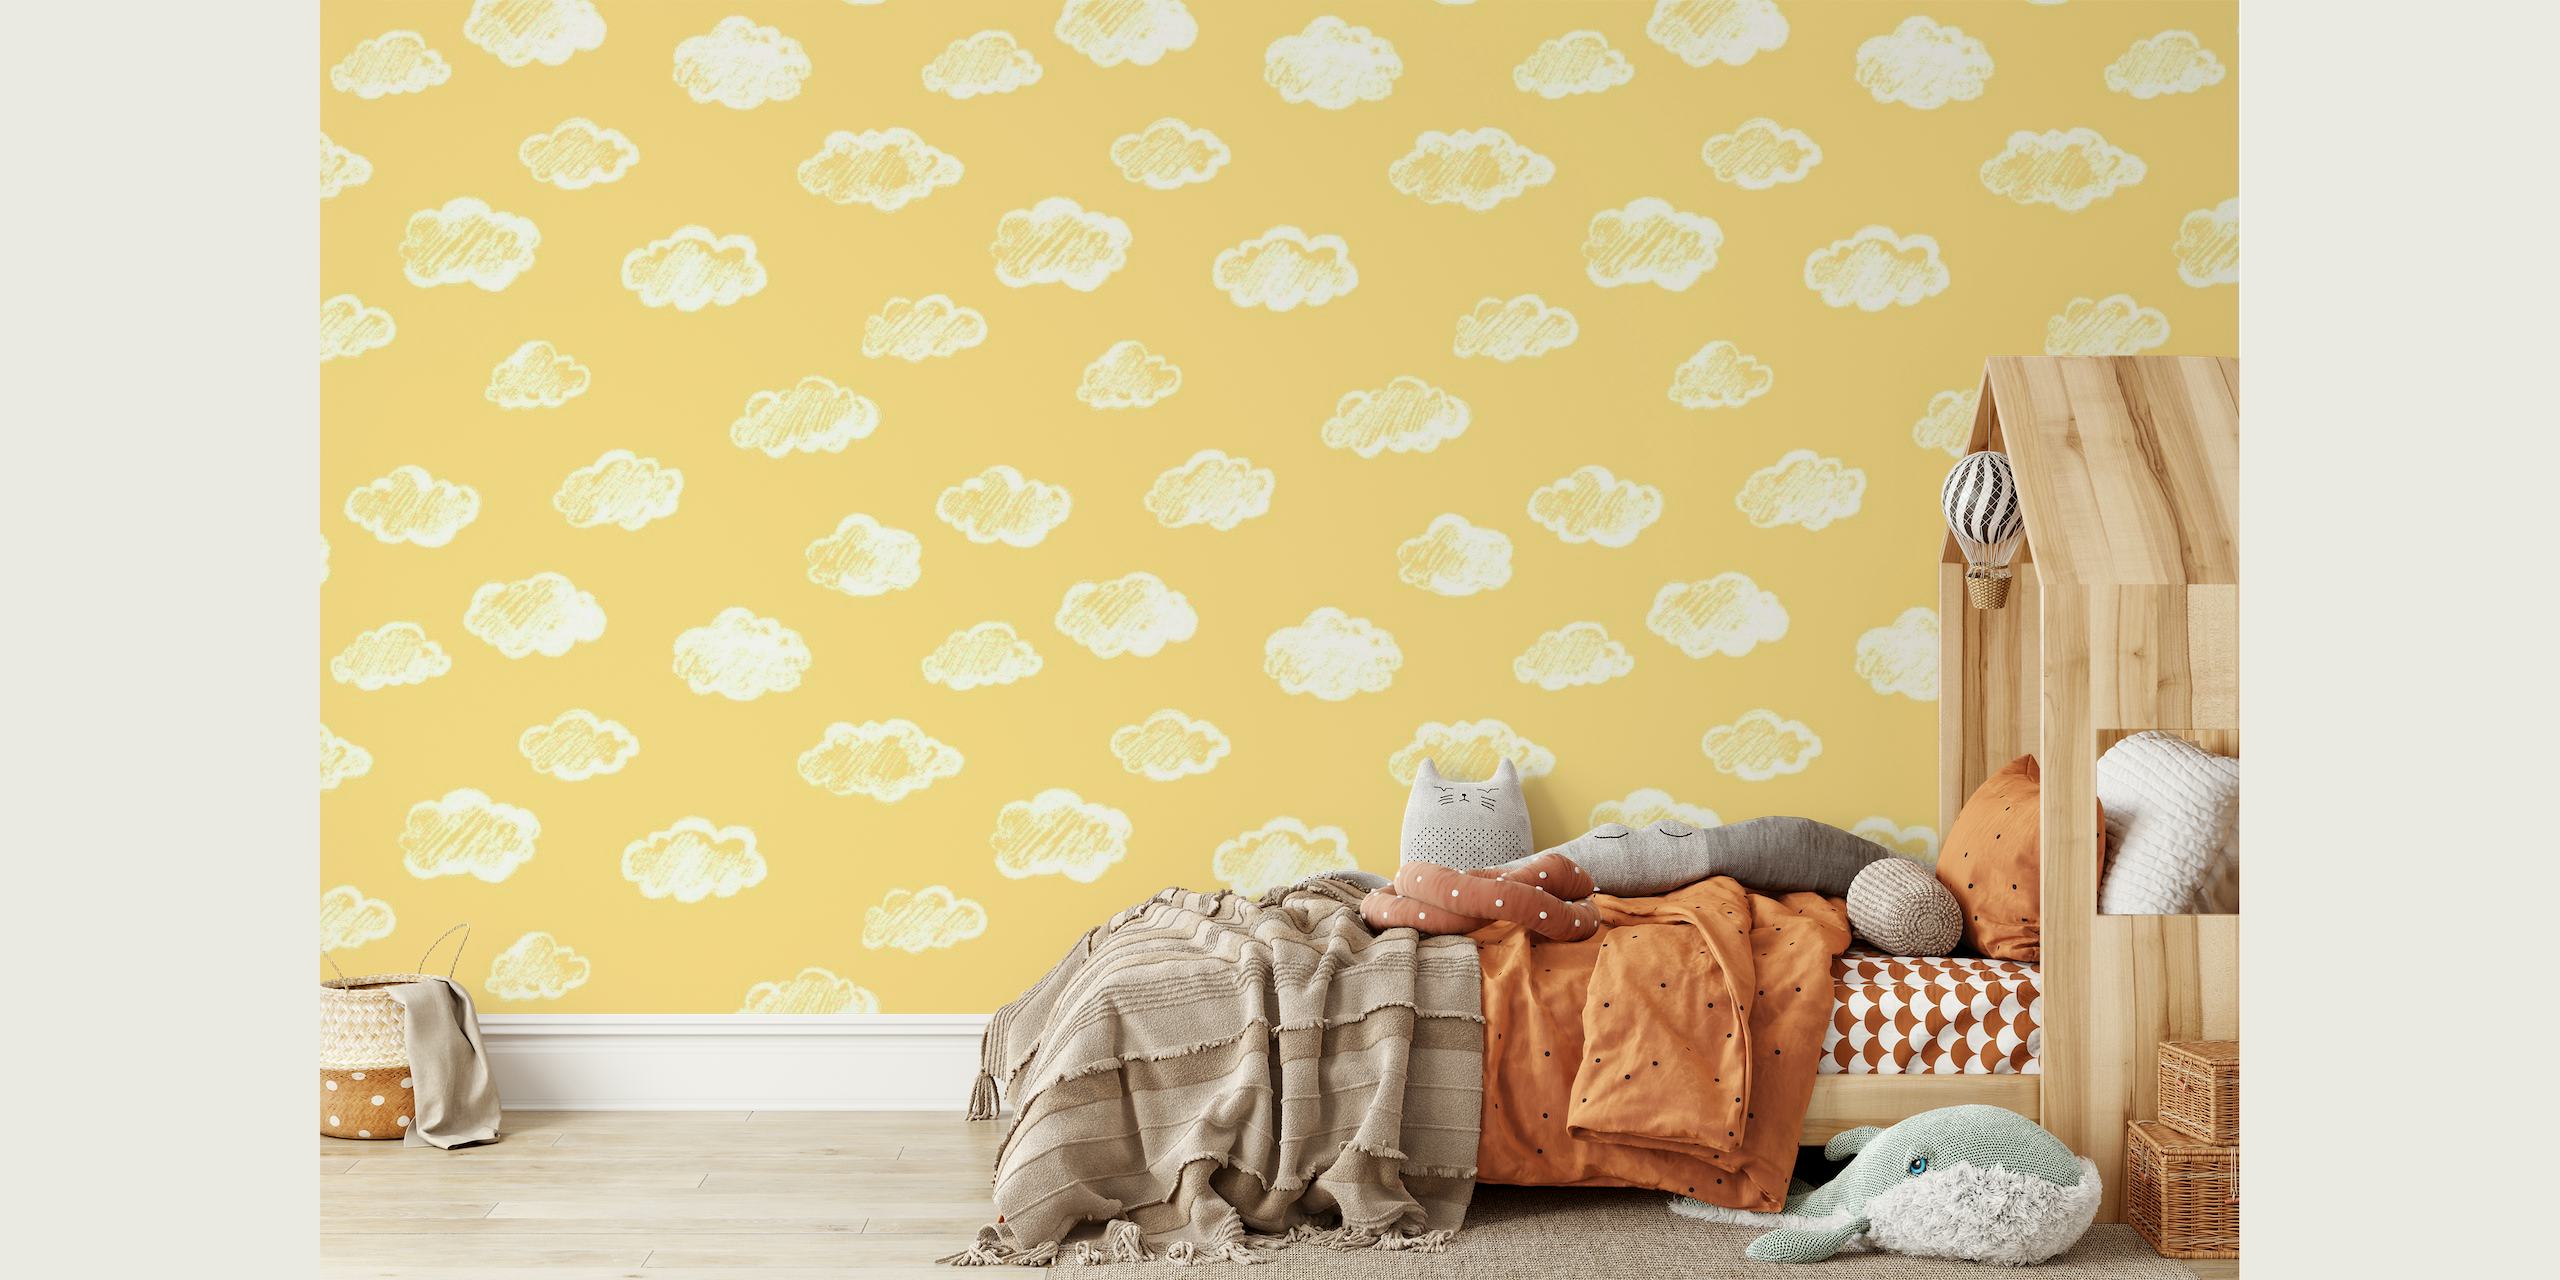 Chalk Clouds On Yellow papel de parede